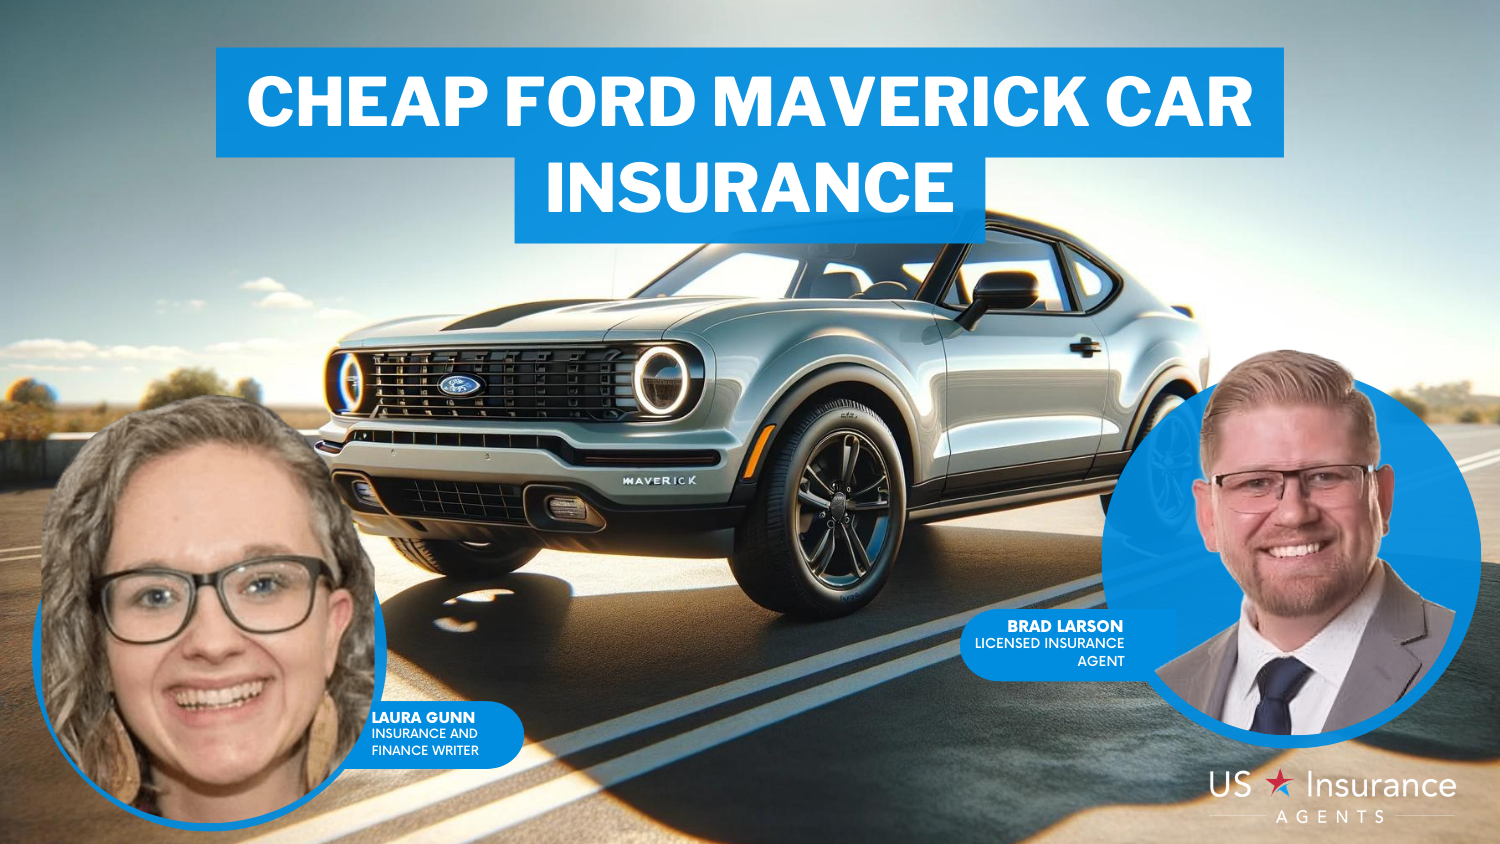 Geico, USAA and State Farm: Cheap Ford Maverick Car Insurance